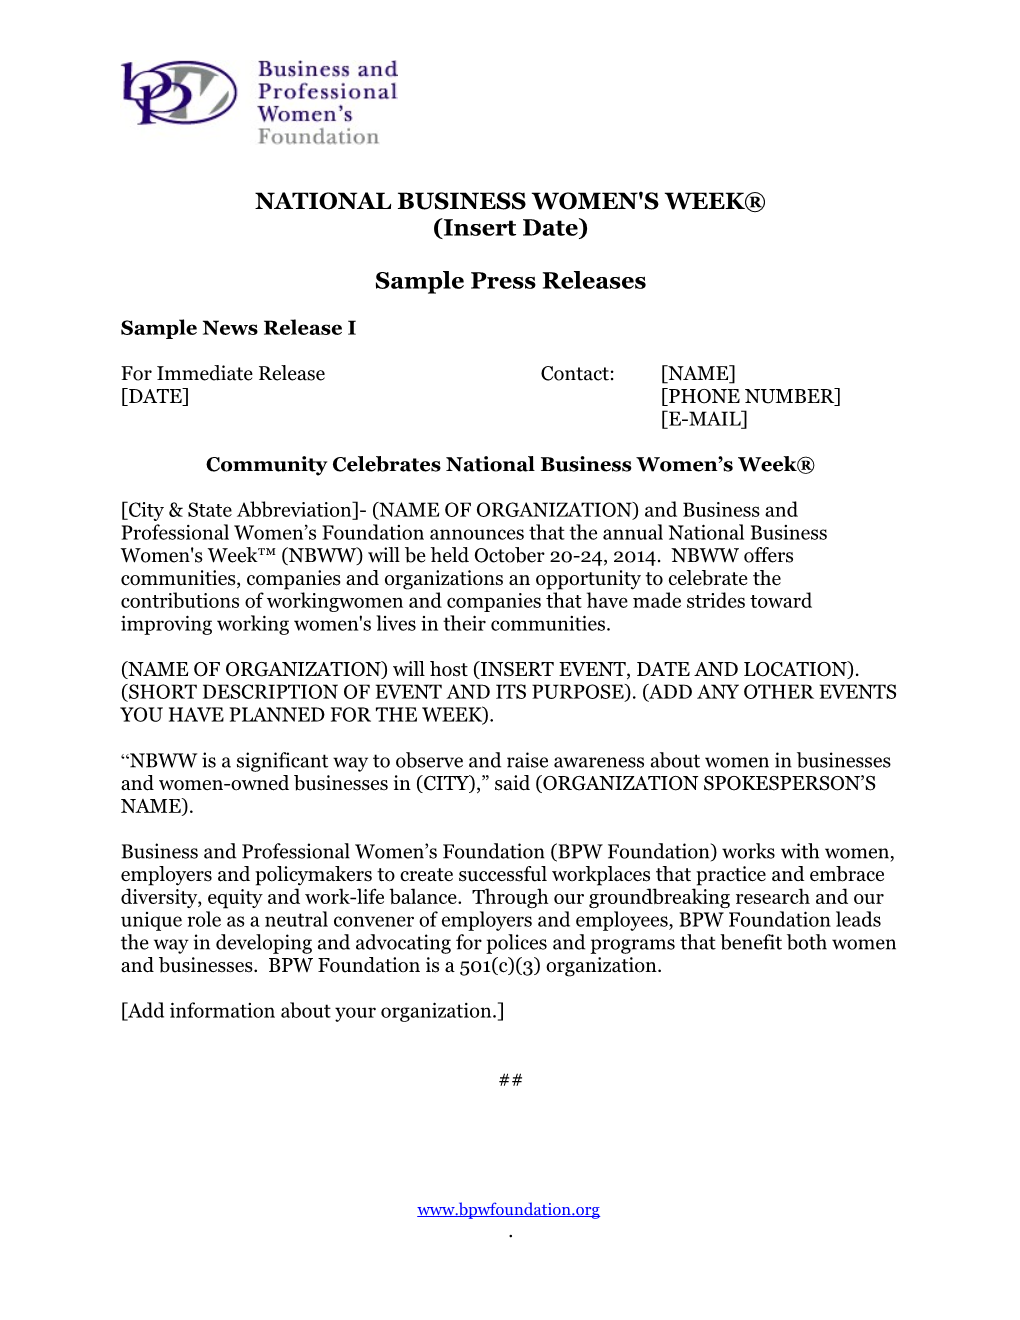 National Business Women's Week October 19-25, 2003